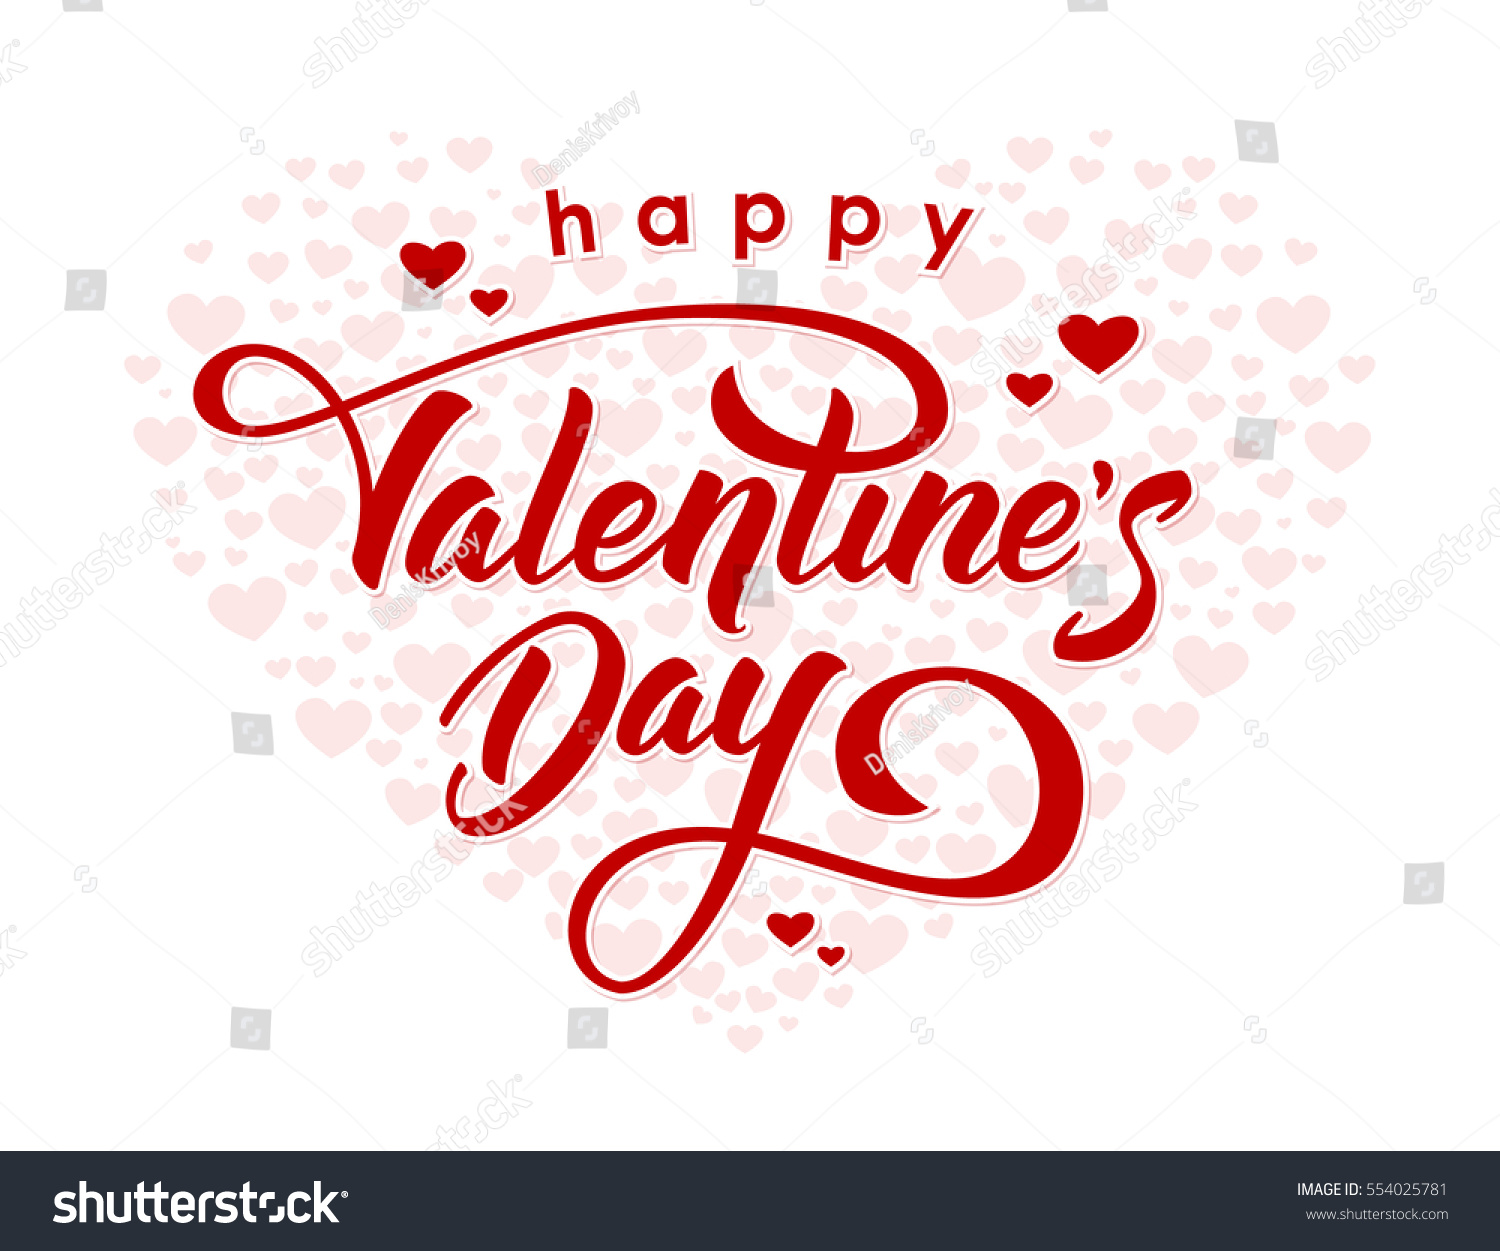 Vector illustration. Hand drawn elegant modern brush lettering of Happy Valentines Day on hearts background. #554025781